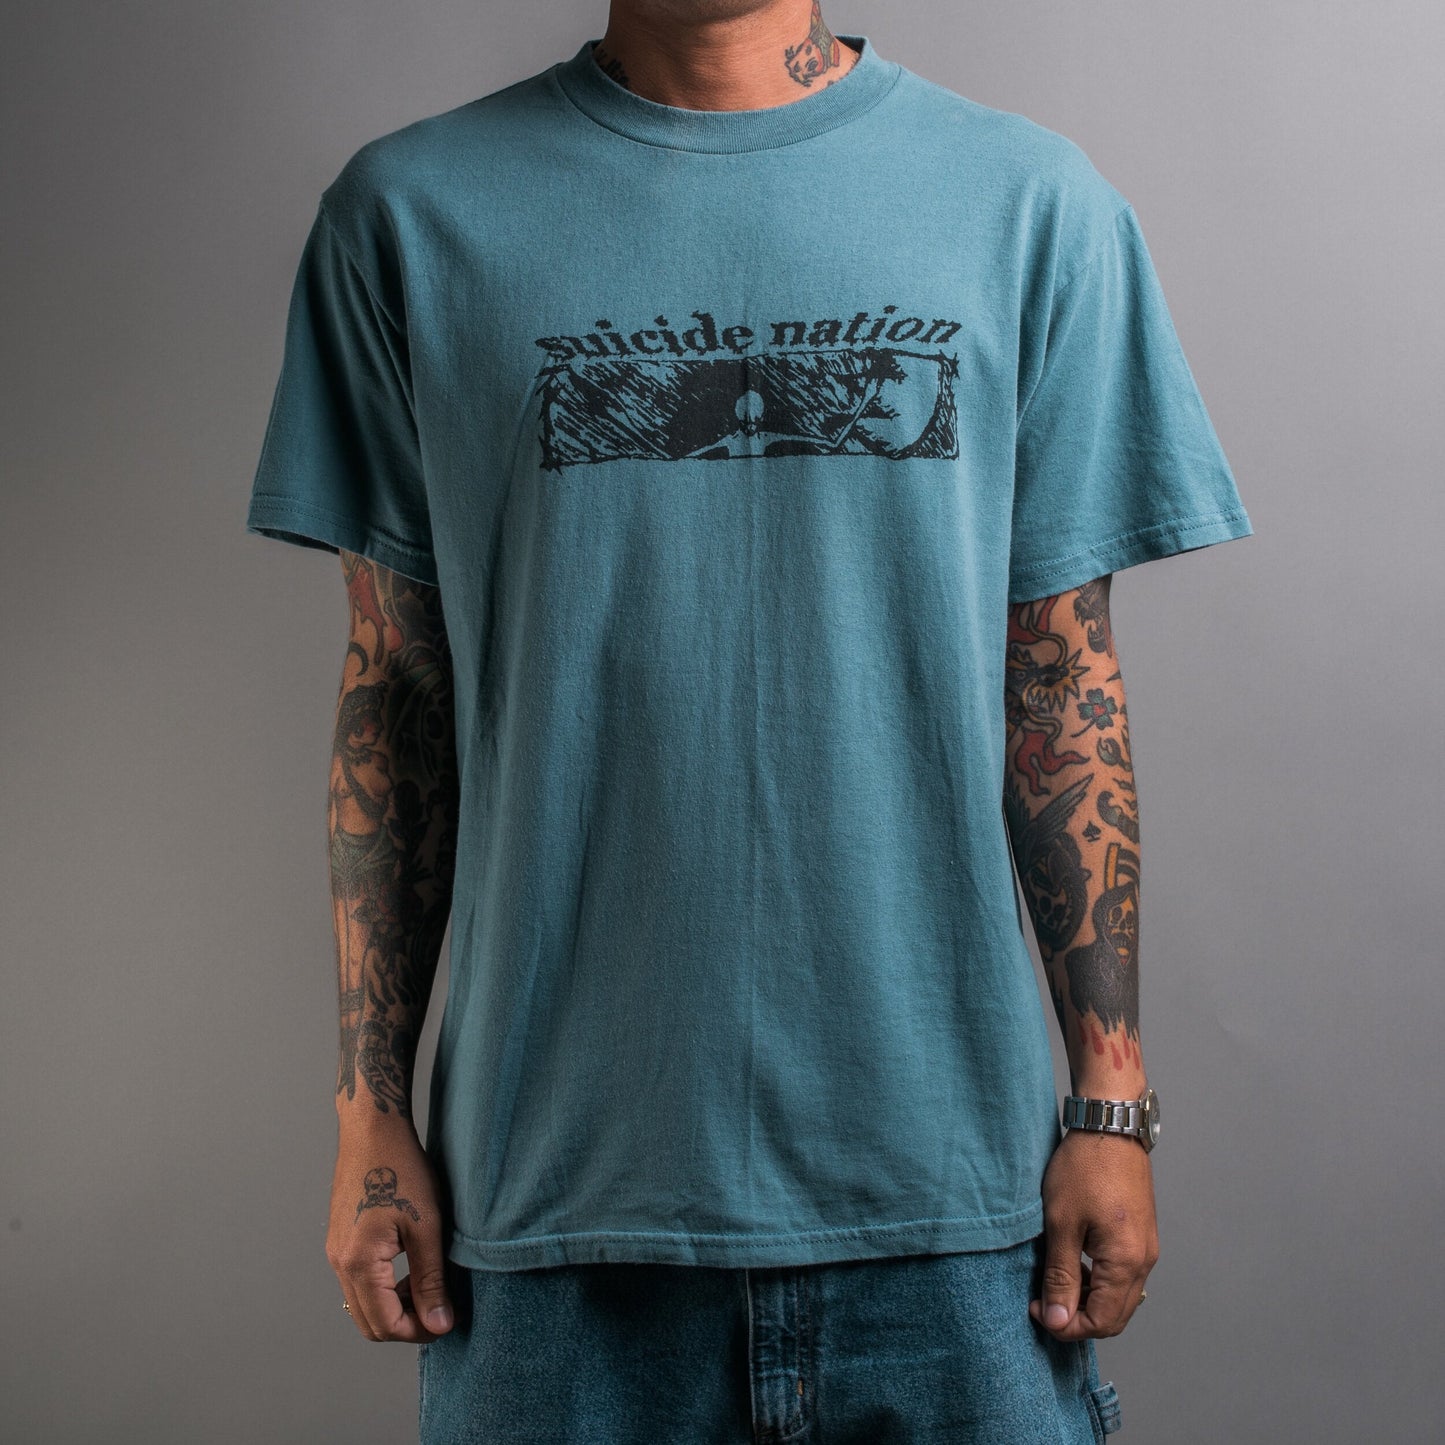 Vintage 90’s Suicide Nation T-Shirt